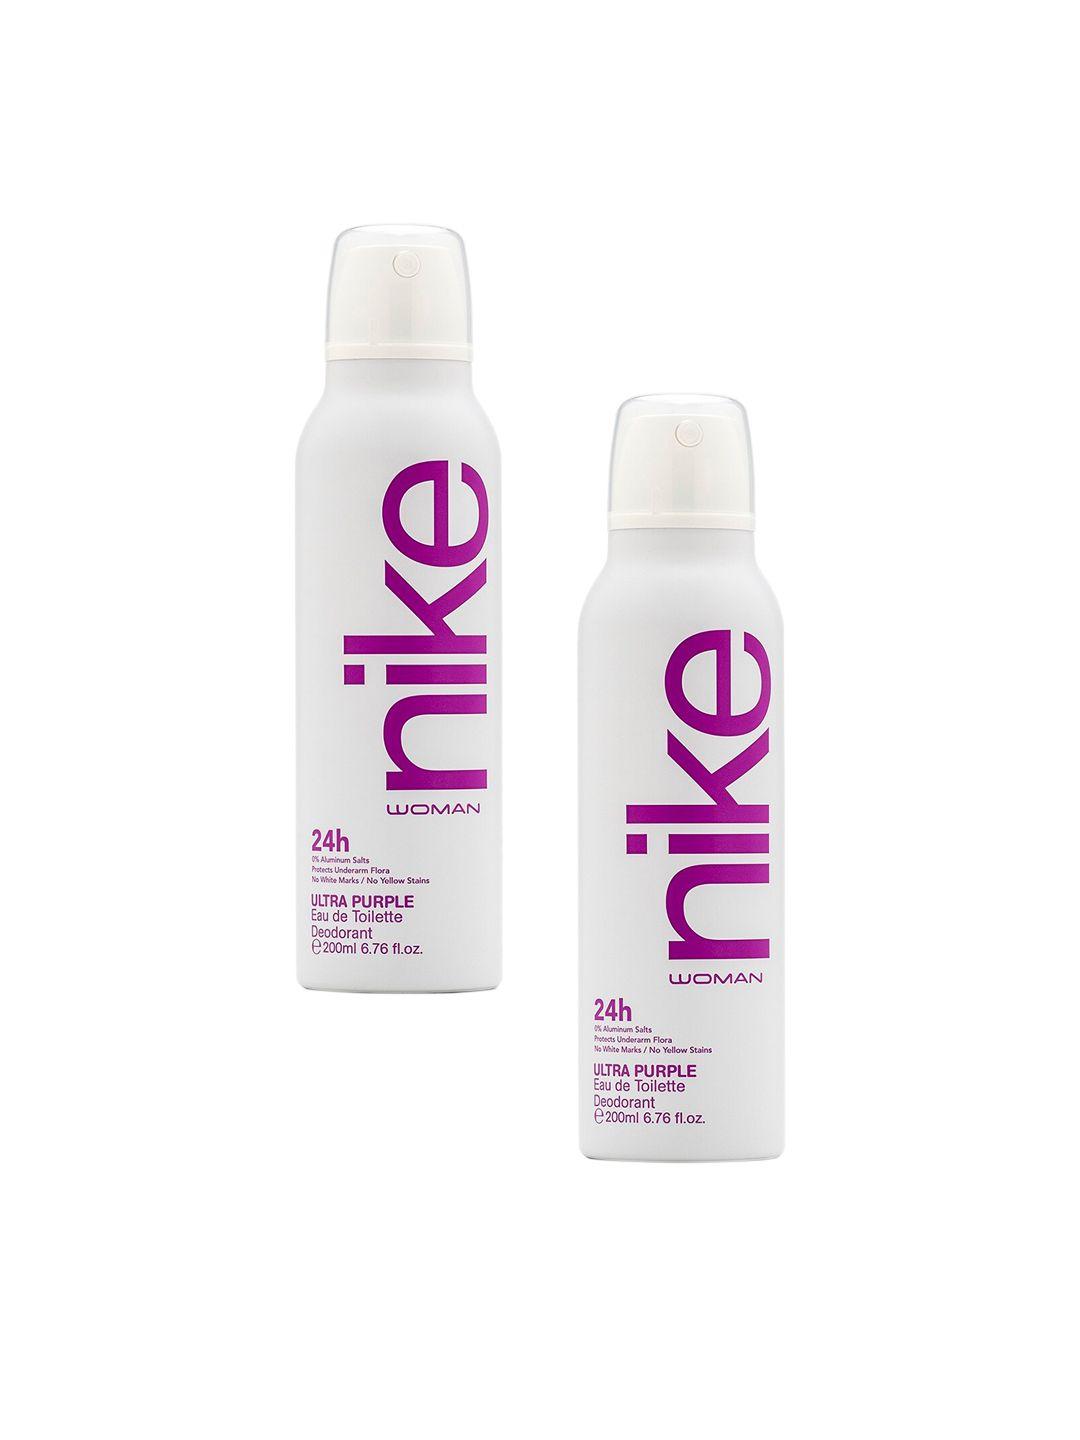 nike women pack of 2 ultra purple fresh edt deodorant - 200 ml each